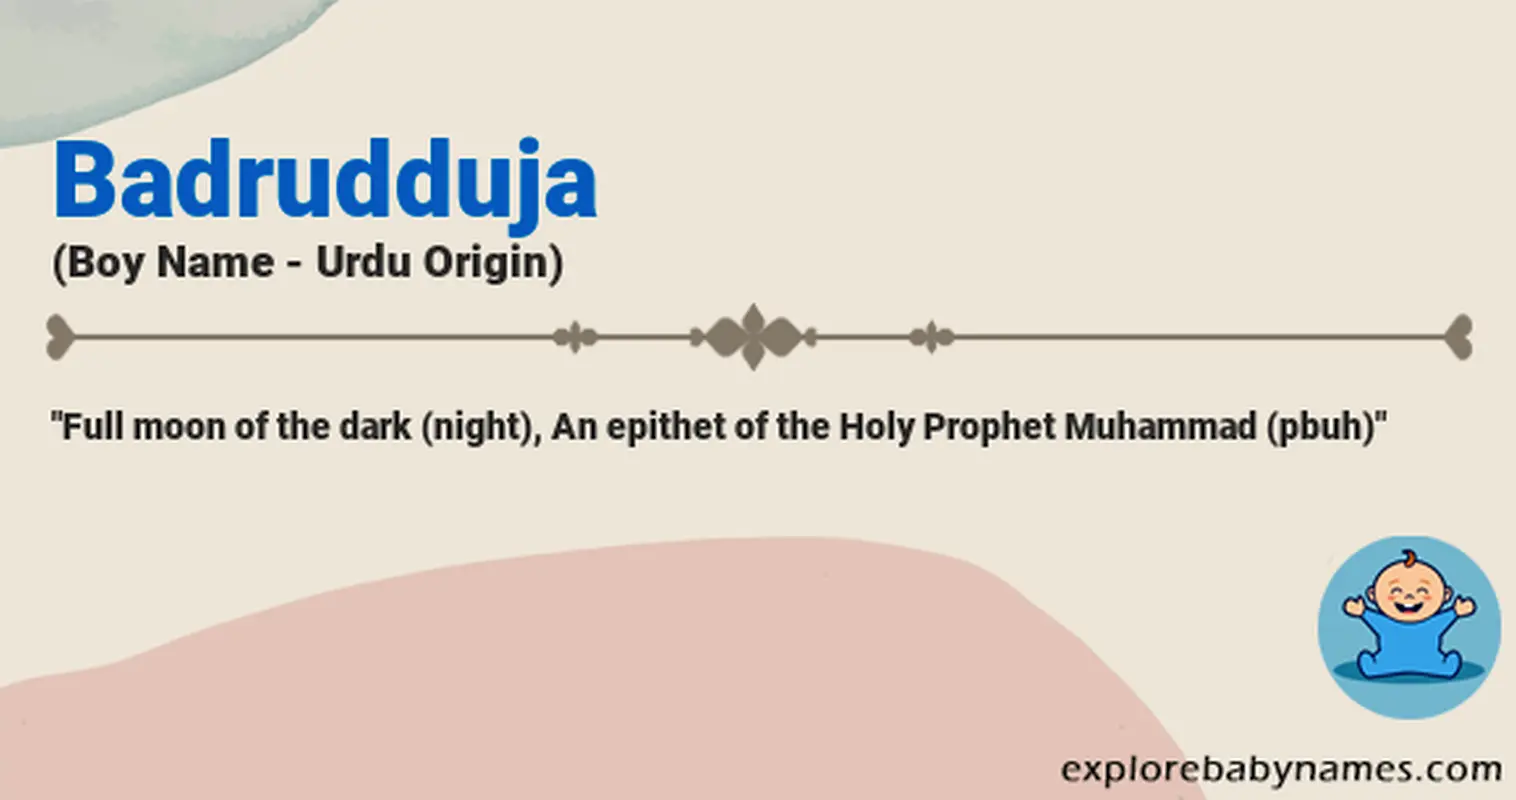 Meaning of Badrudduja